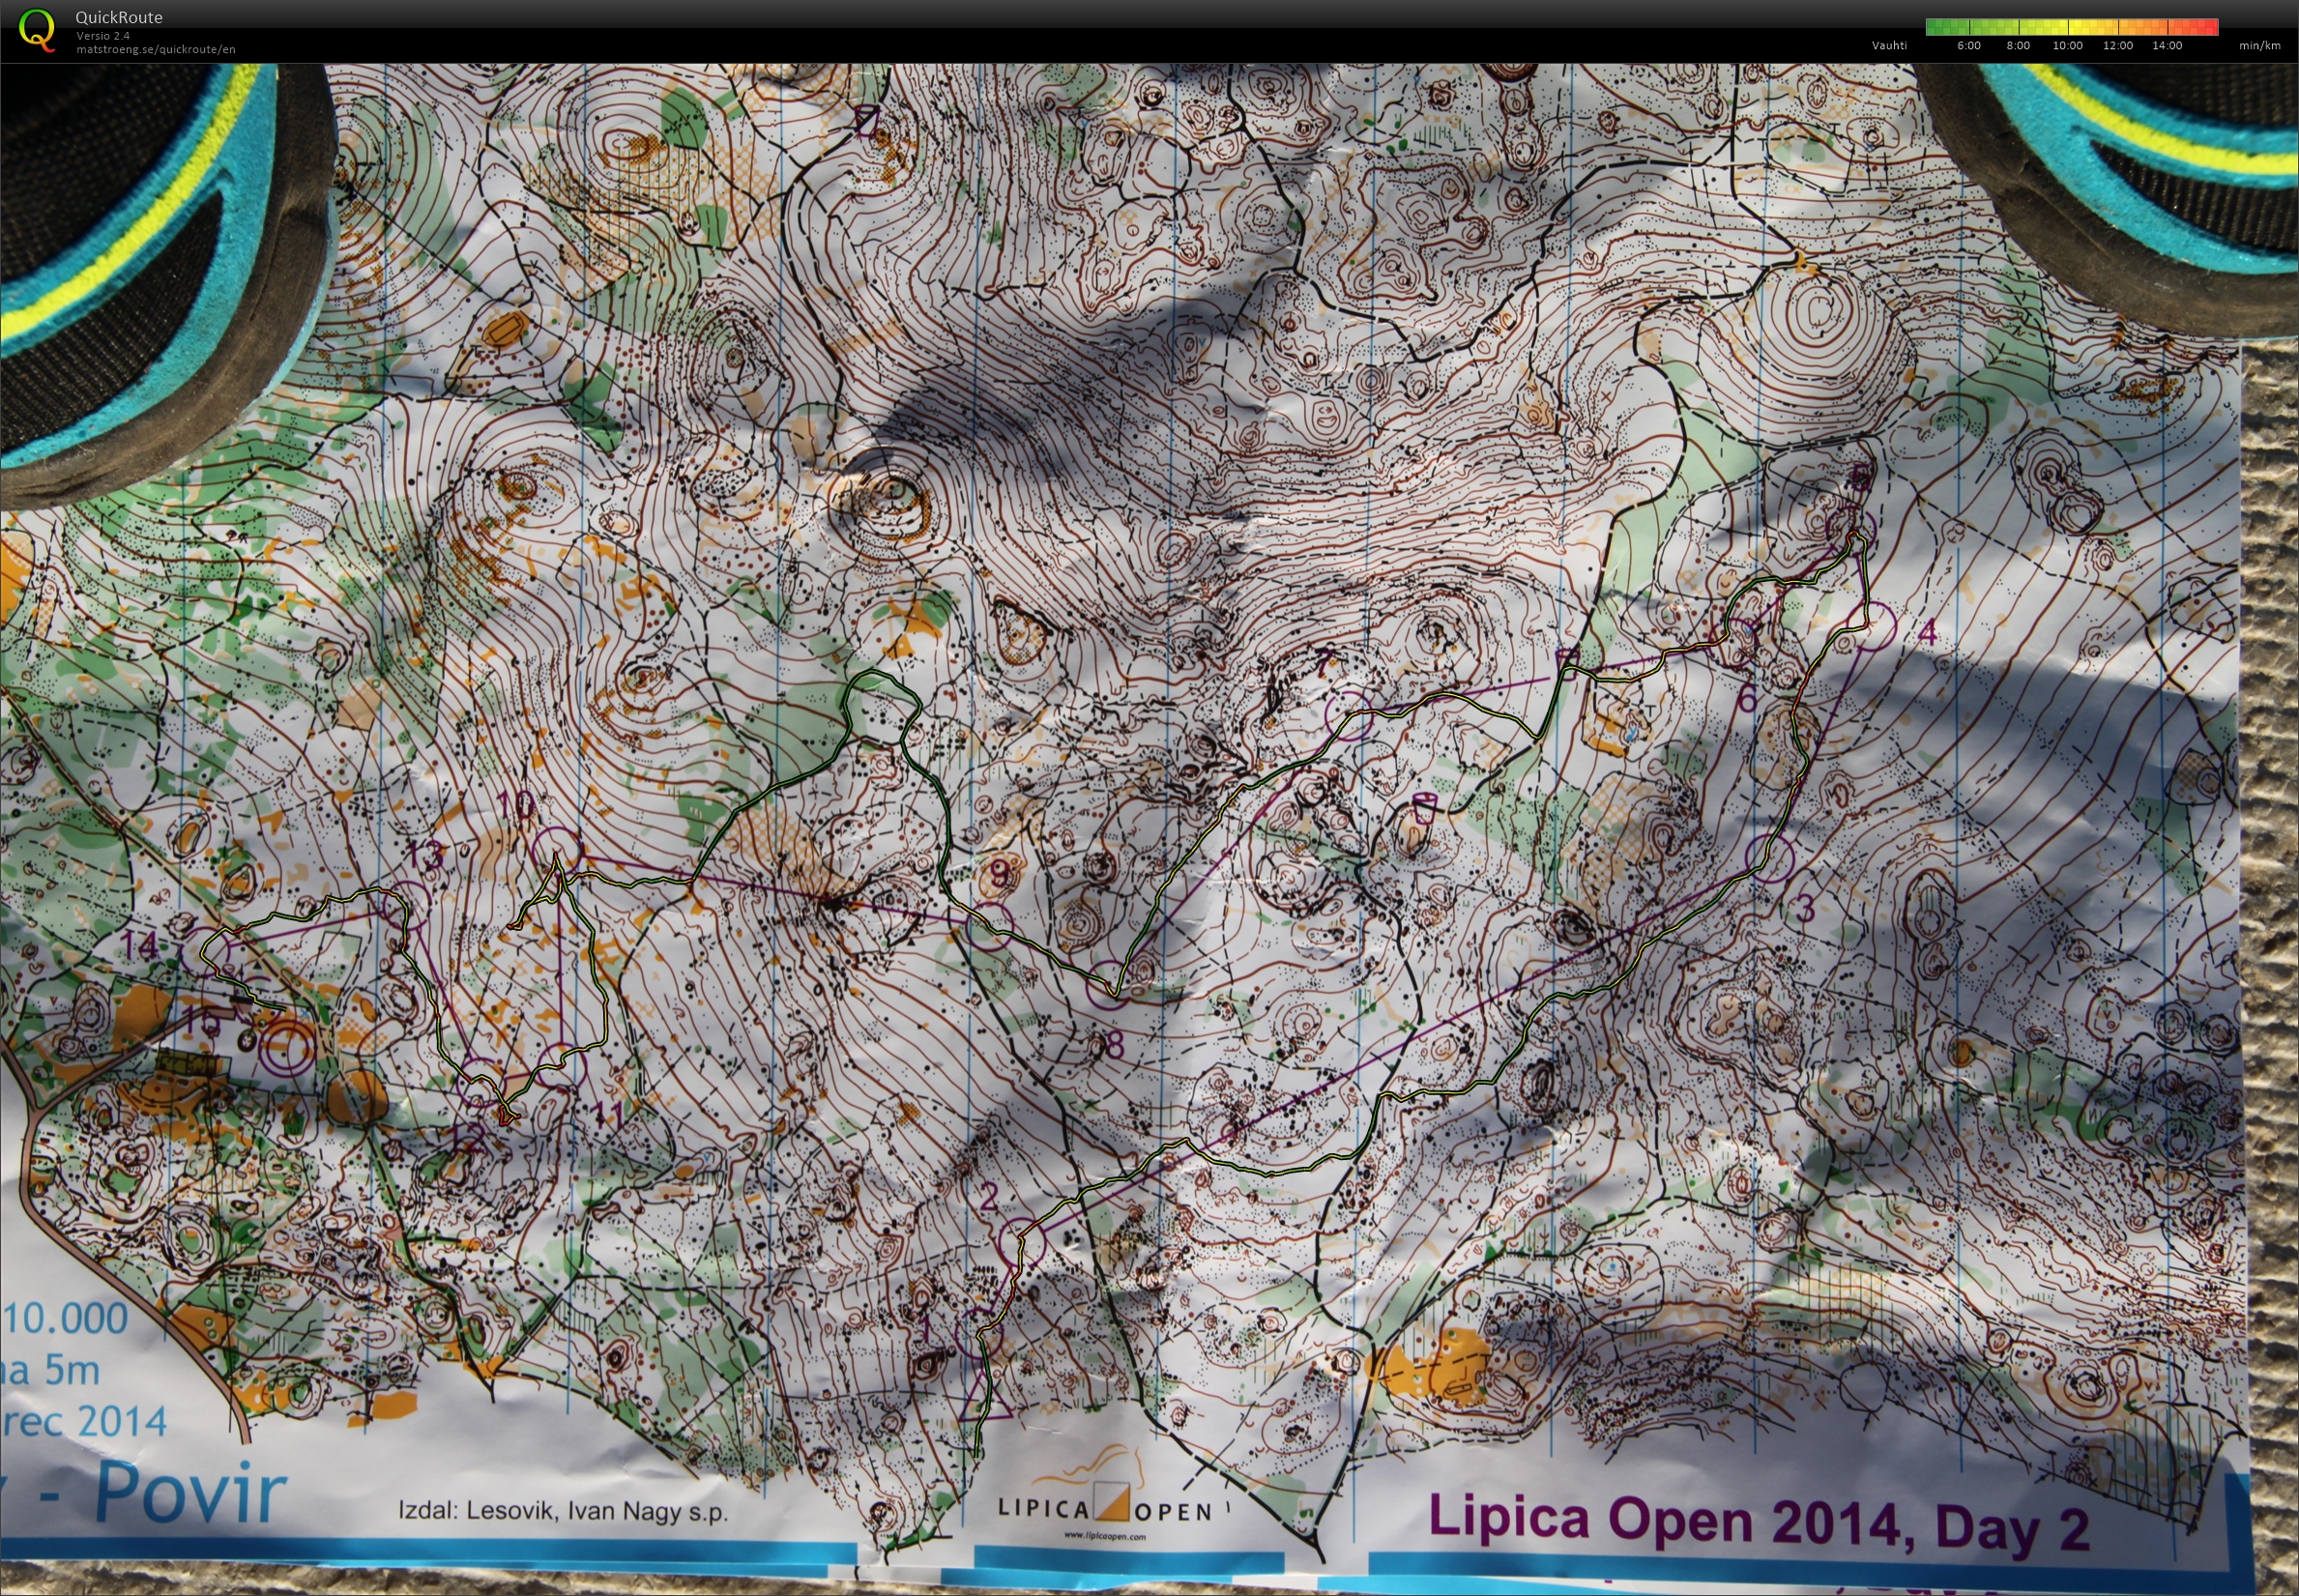 Lipica open 2 (09-03-2014)